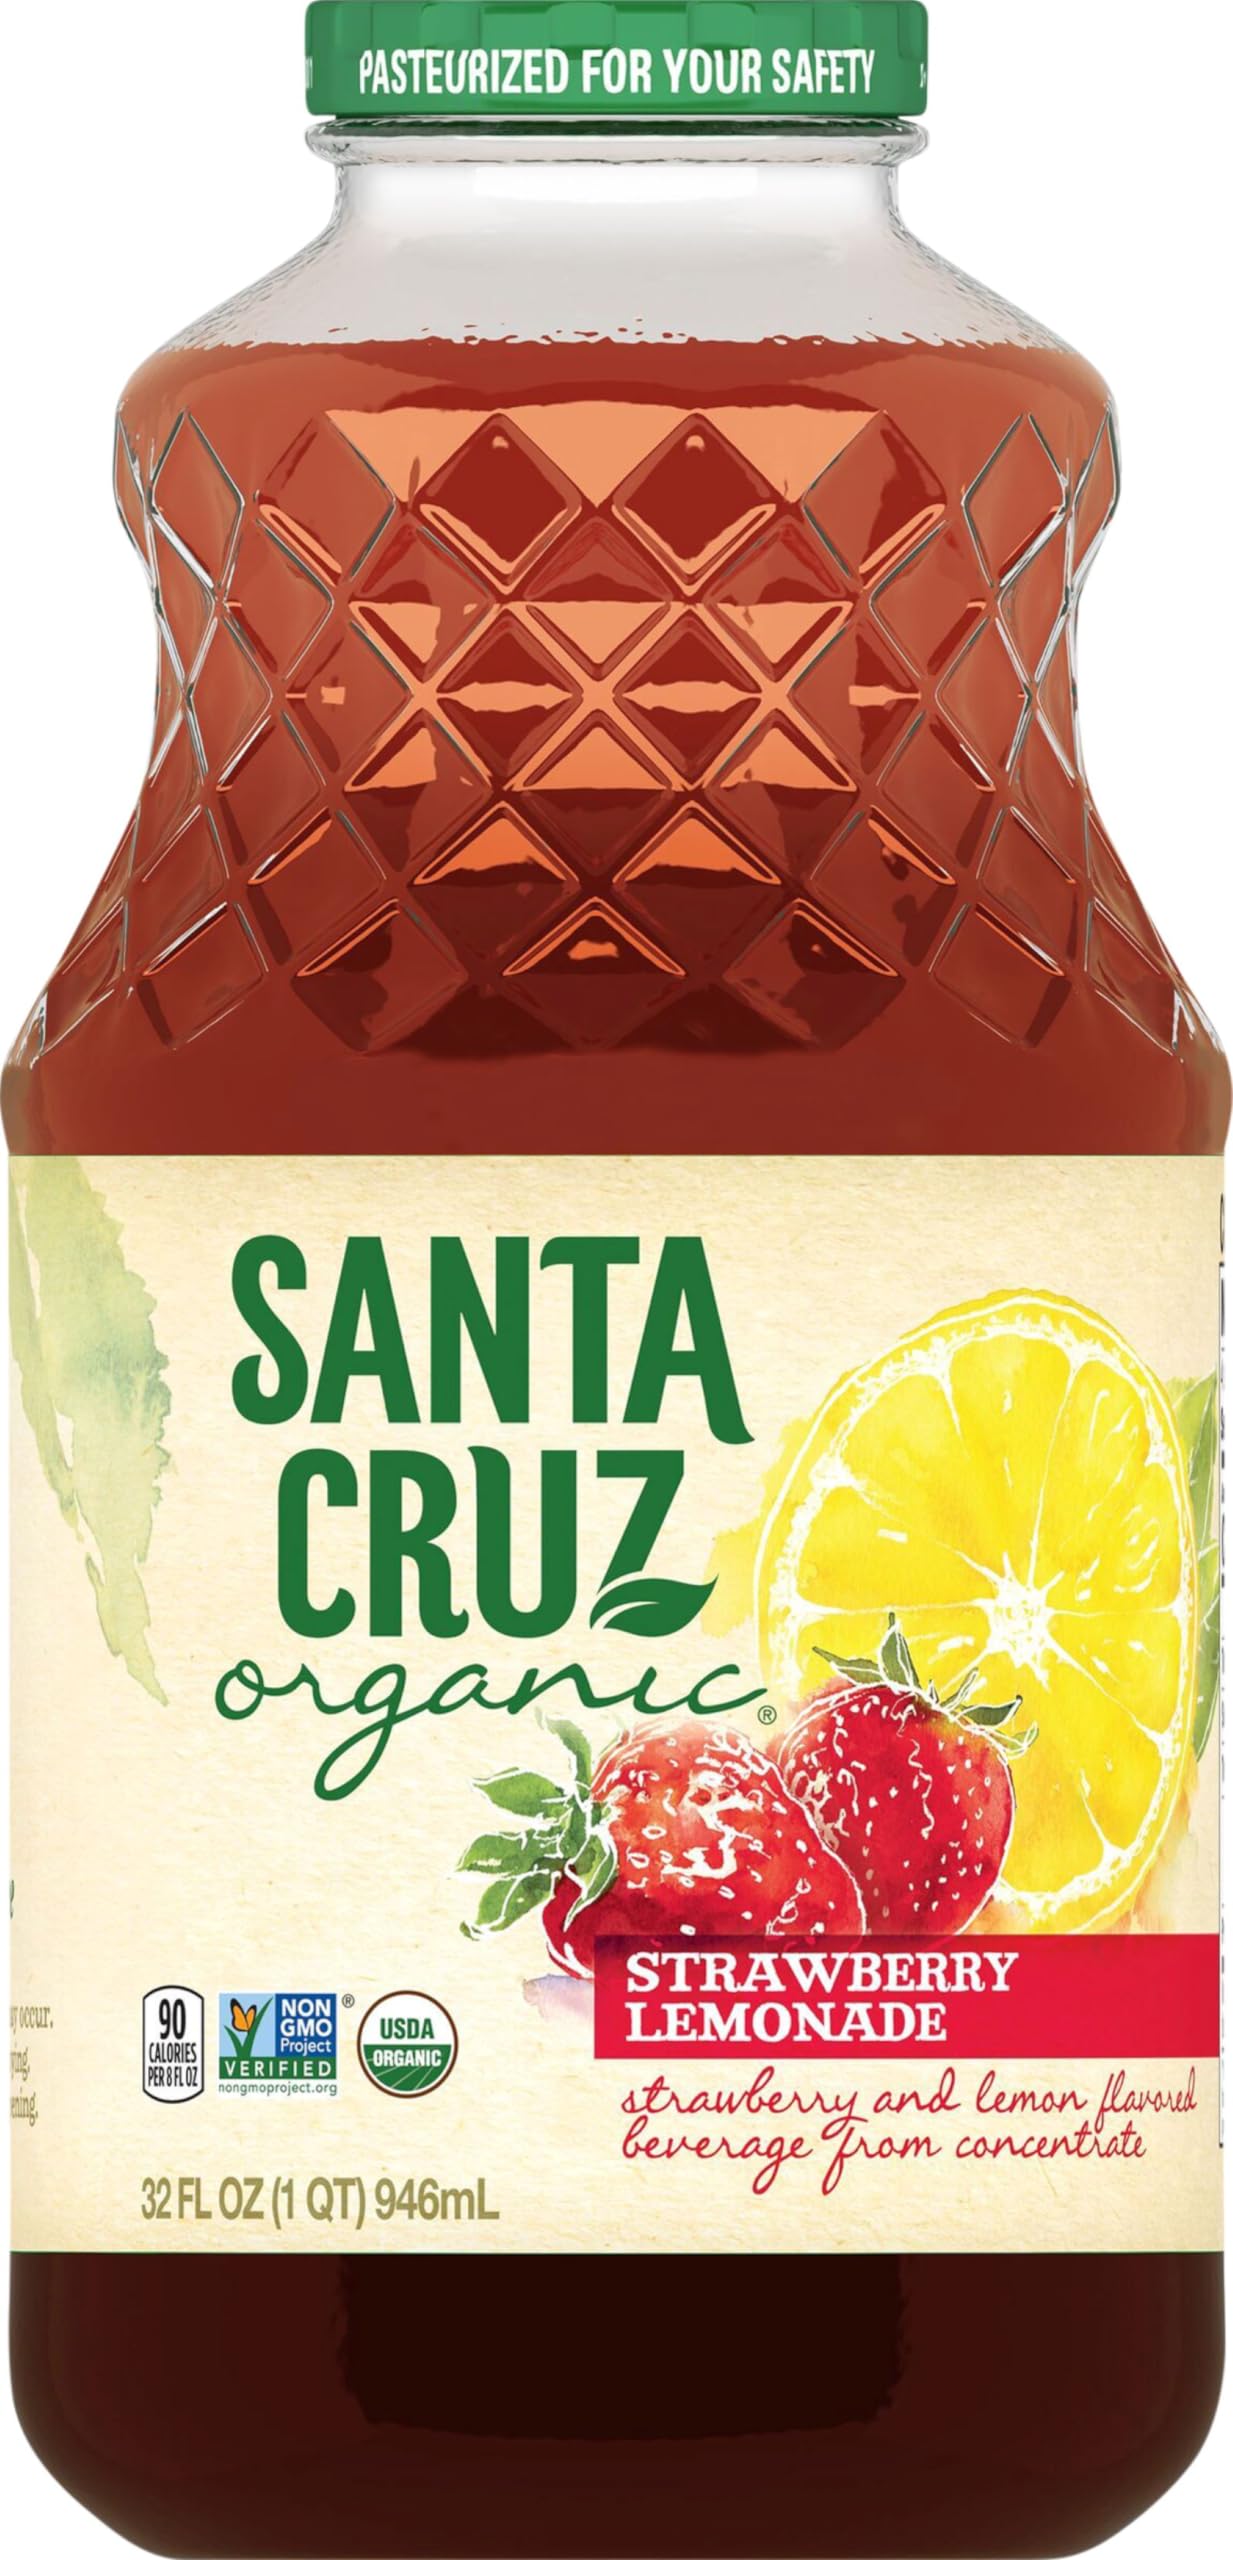 32-Oz Santa Cruz Organic Strawberry Lemonade $2.38 w/ S&S + Free Shipping w/ Prime or on orders over $35